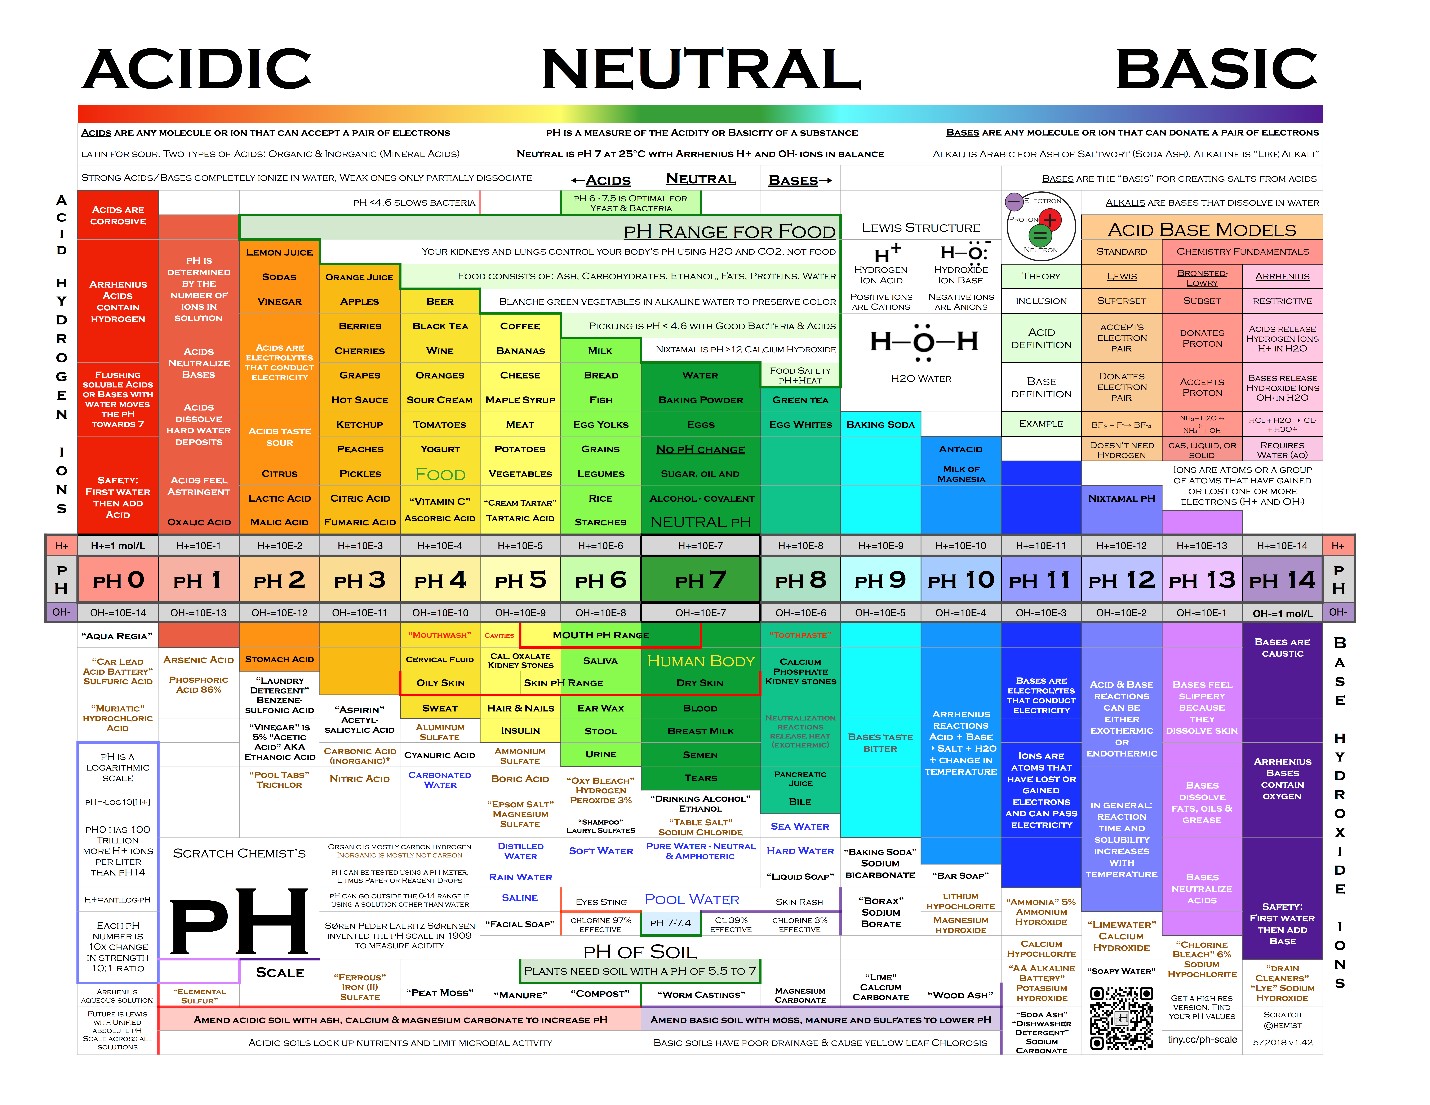 pH Scale Scratch Chemist